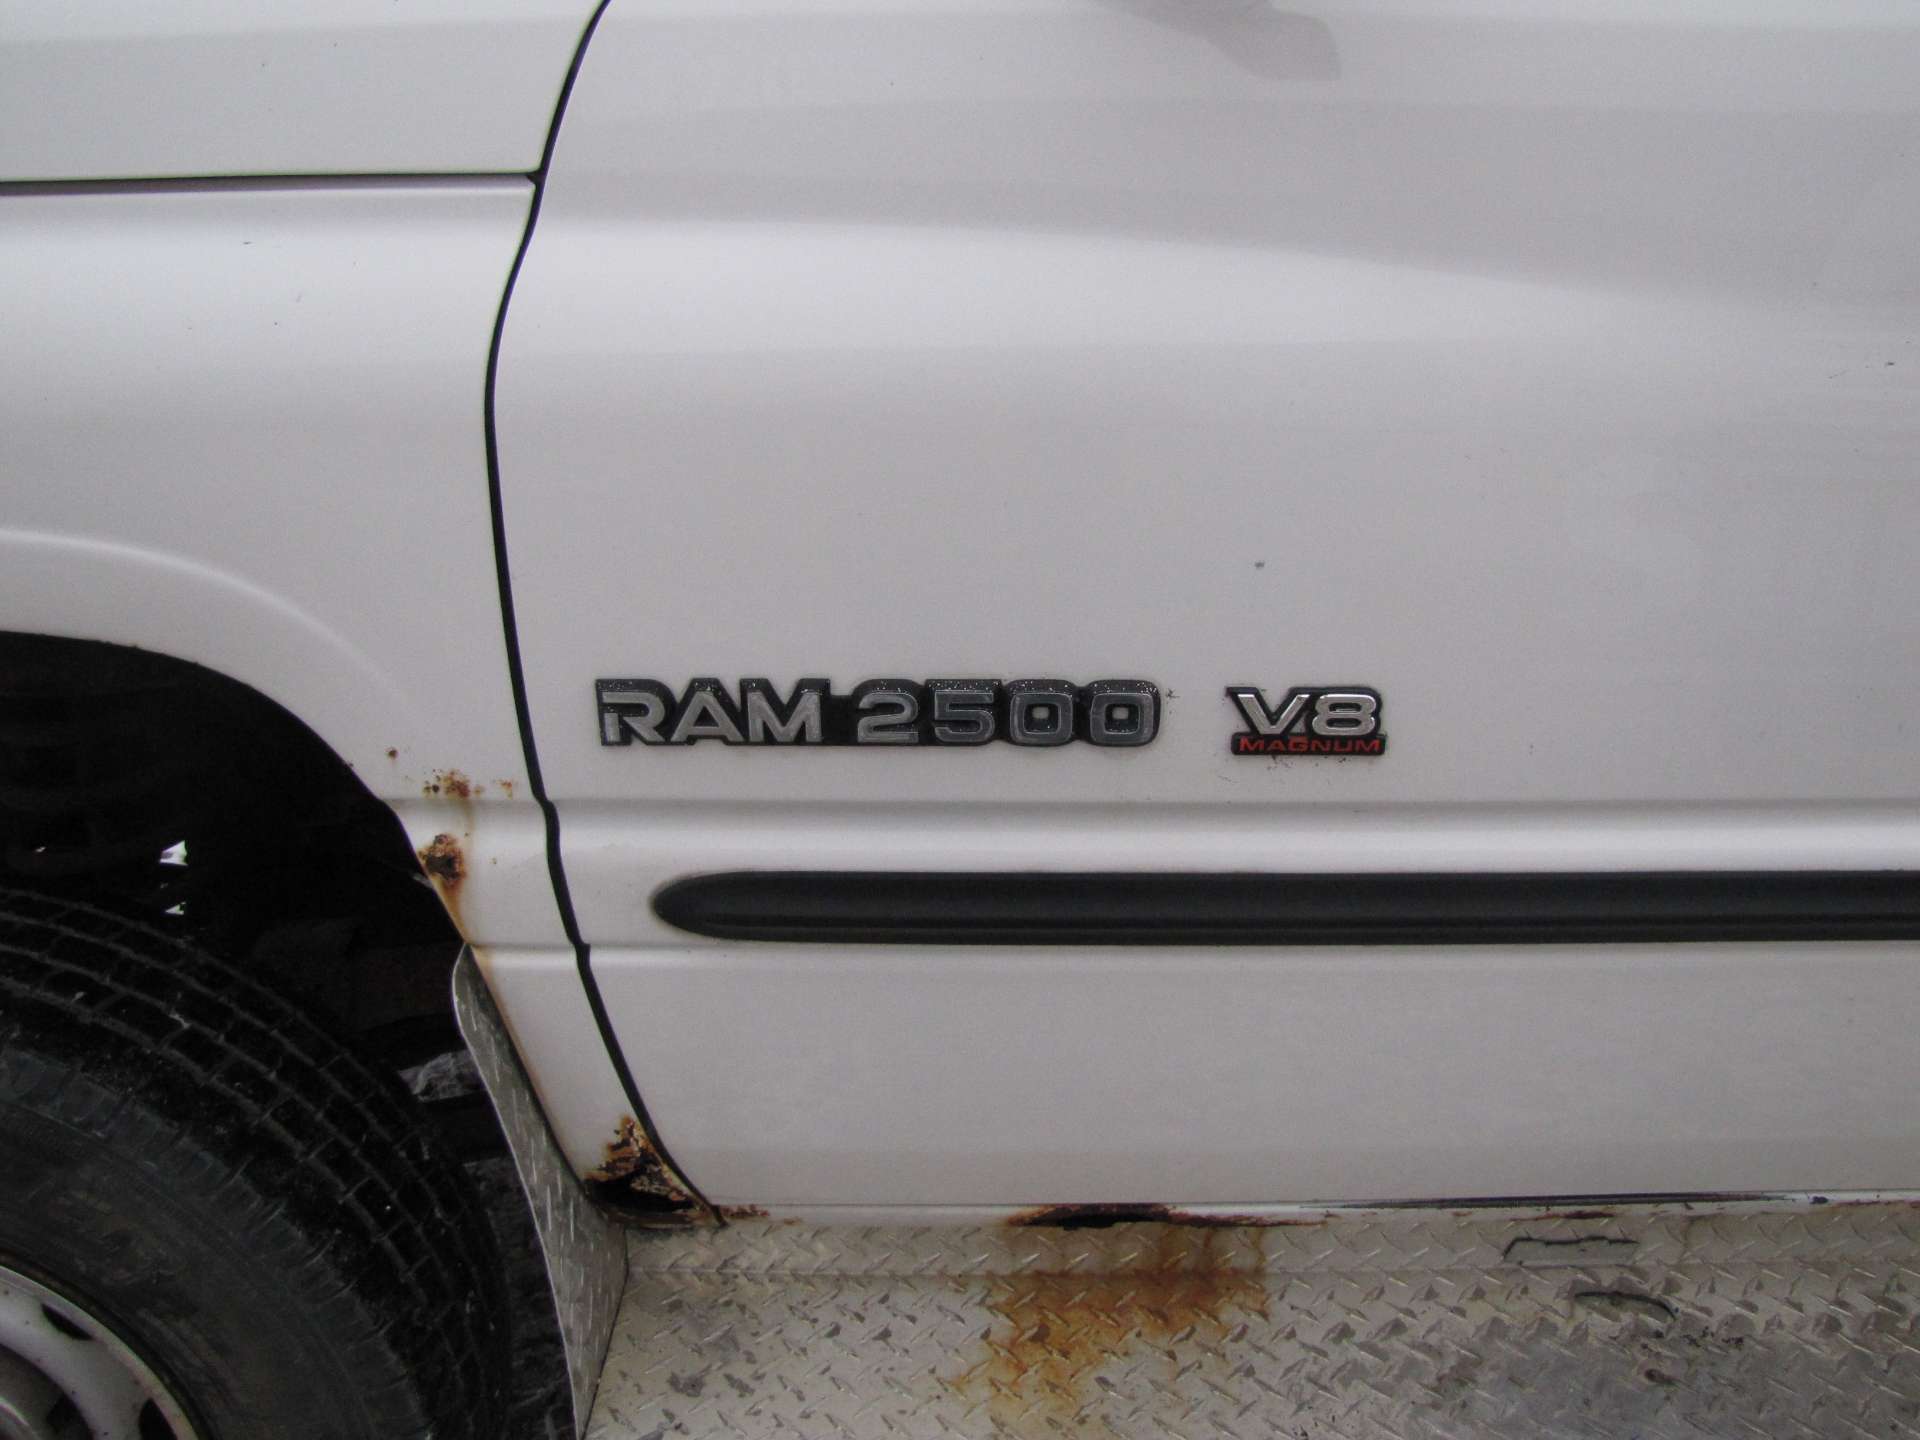 2002 Dodge Ram 2500 pickup truck - Image 18 of 61